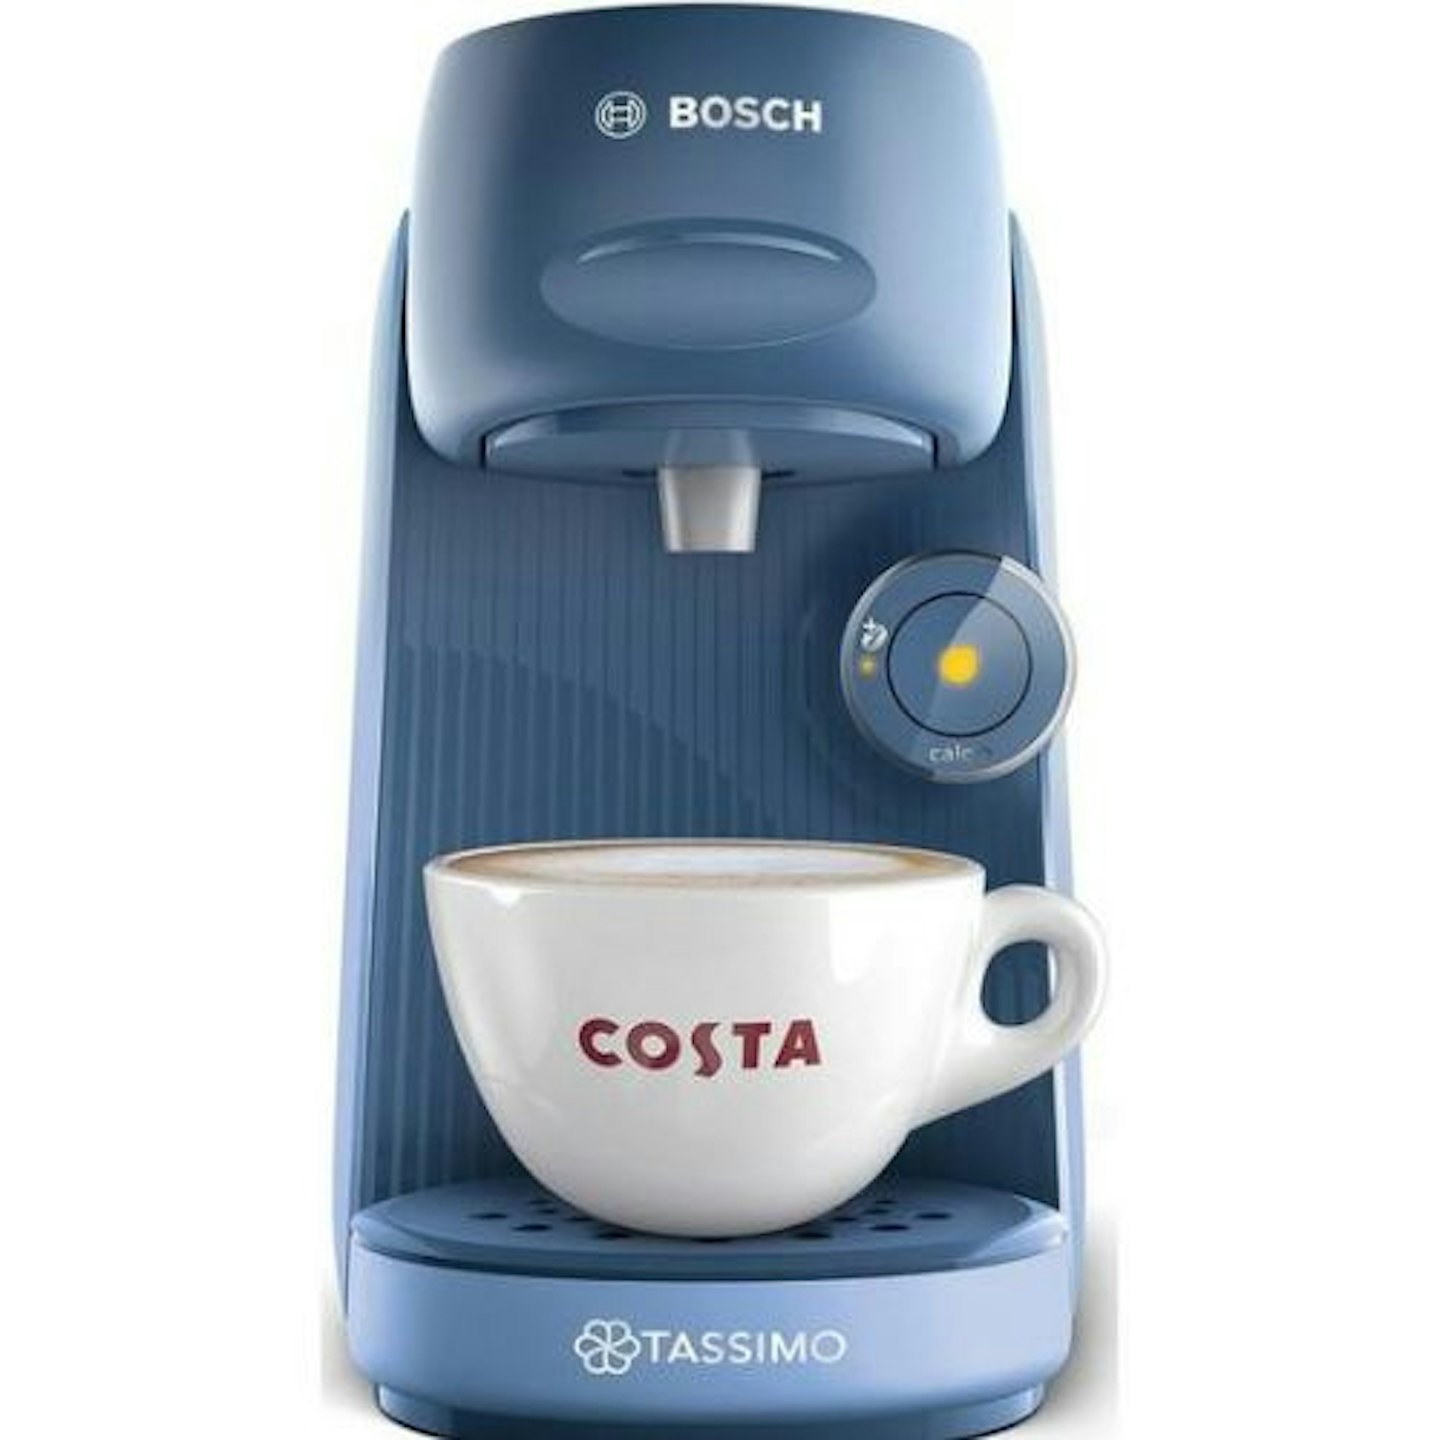 Tassimo Bosch Finesse Coffee Machine - Blue